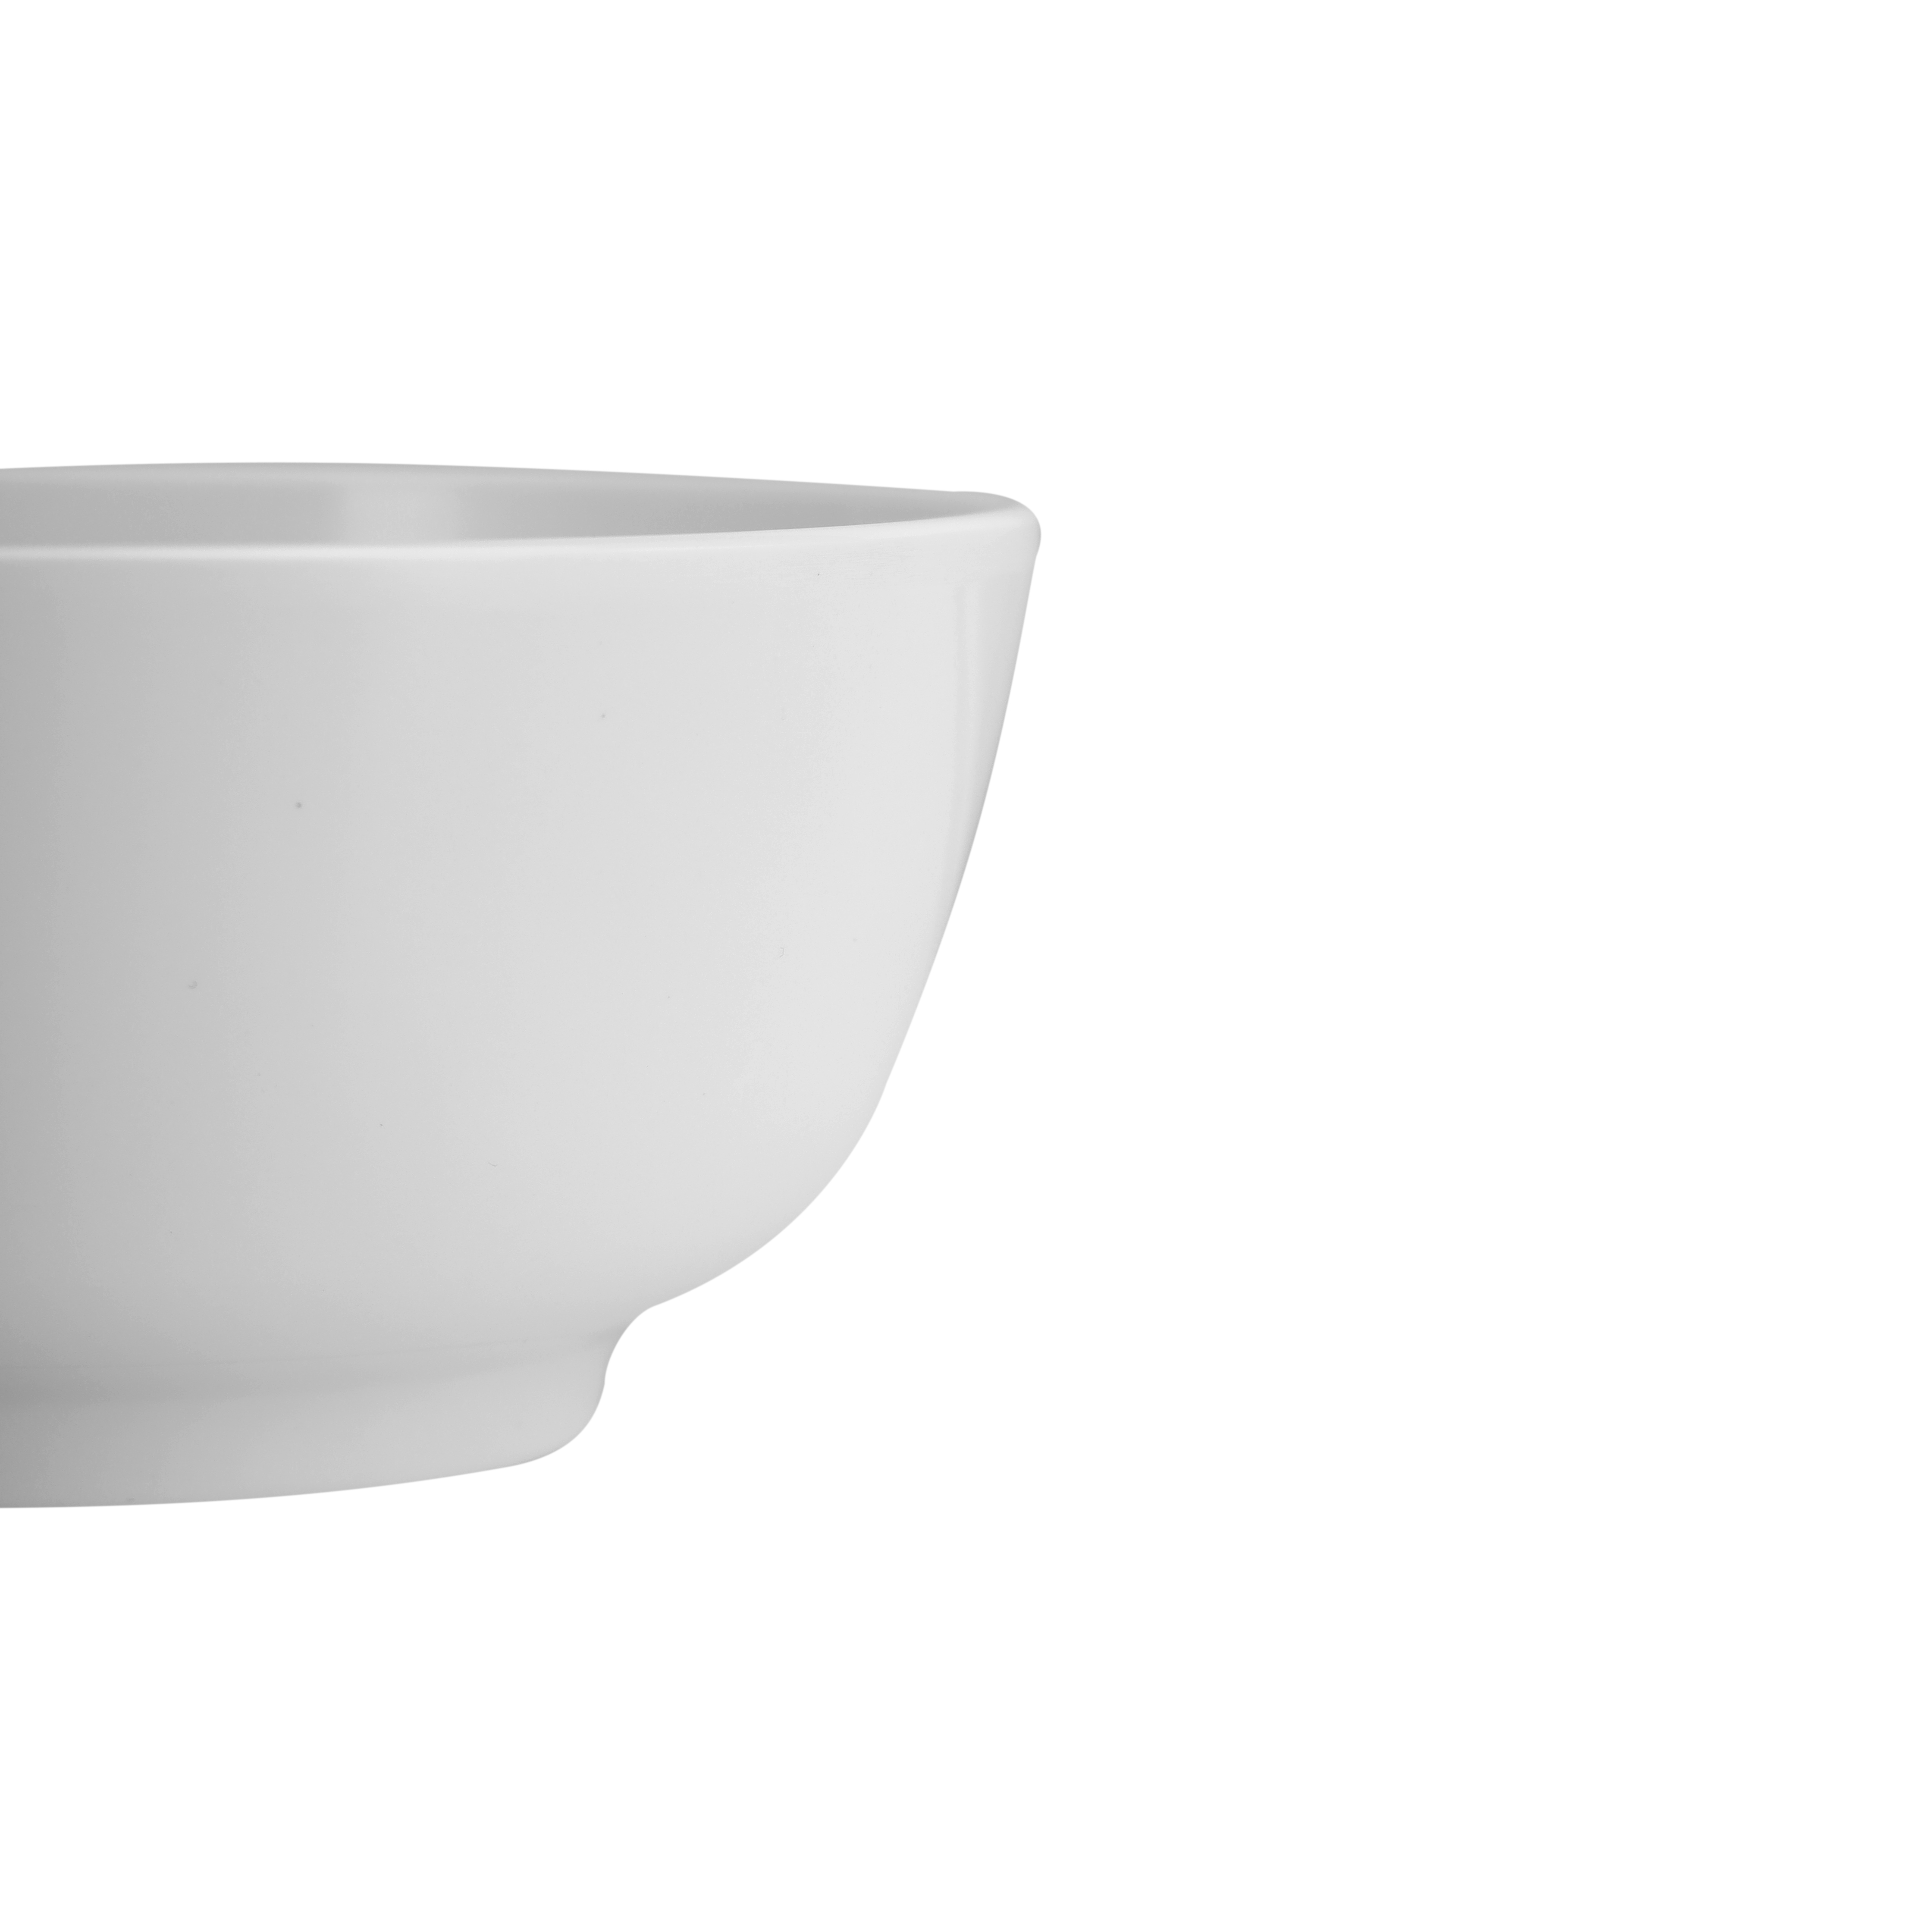 Melamine Square Bowl Black 70x42mm Ryner Commercial Plastic Serving Soup Bowls 